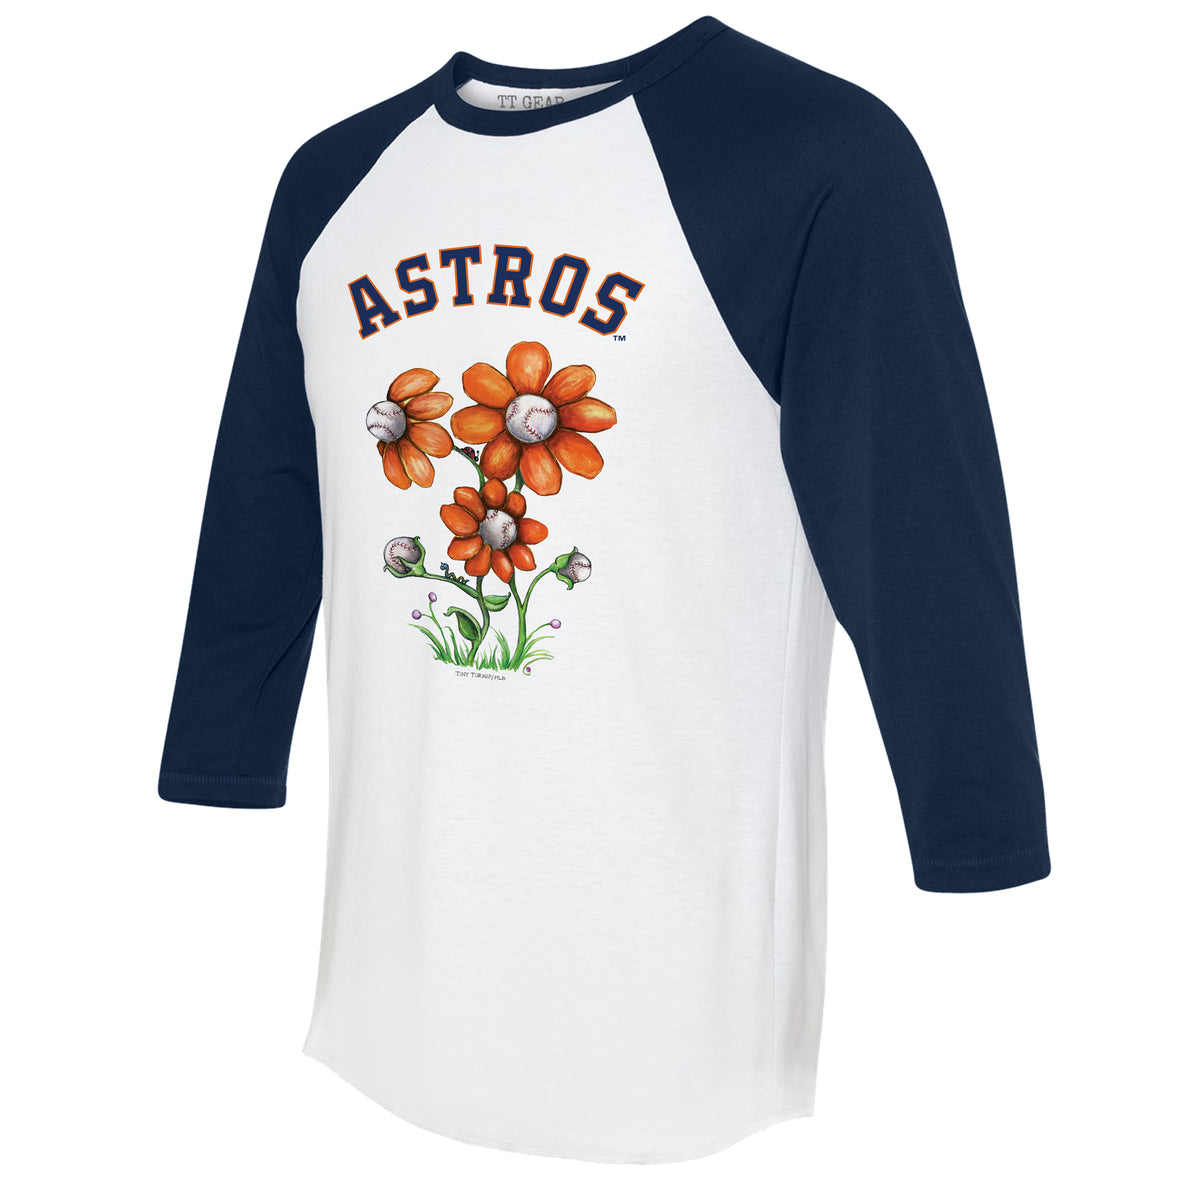 Houston Astros Baseball Love 3/4 Navy Blue Sleeve Raglan Youth XL (14)